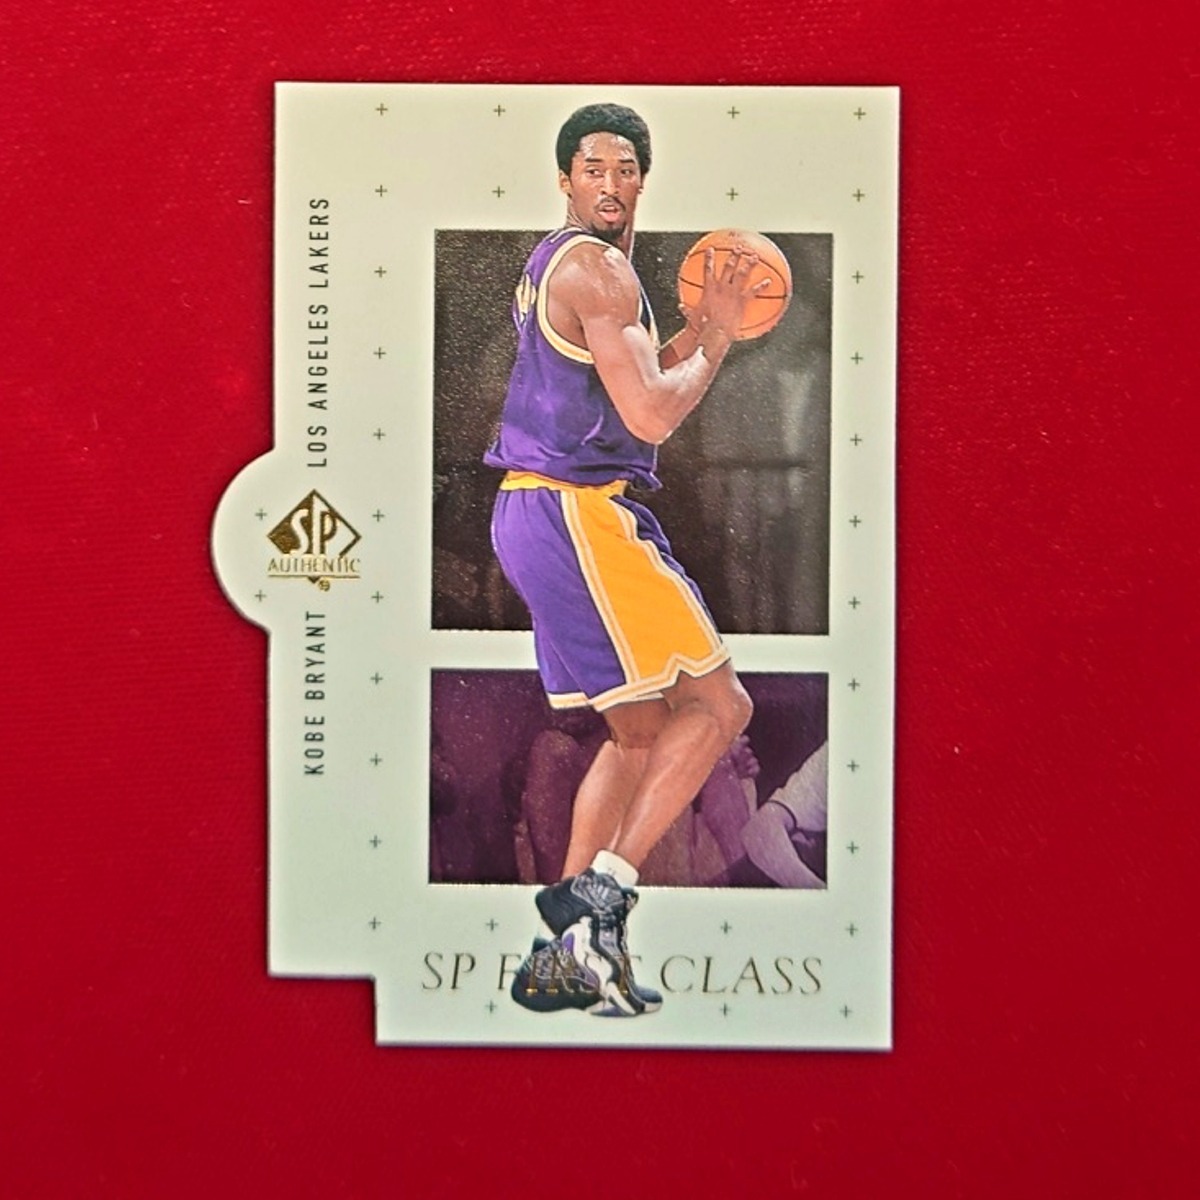 ◇【KOBE】 Kobe Bryant NBA UD Sp Authentic SP First Class card